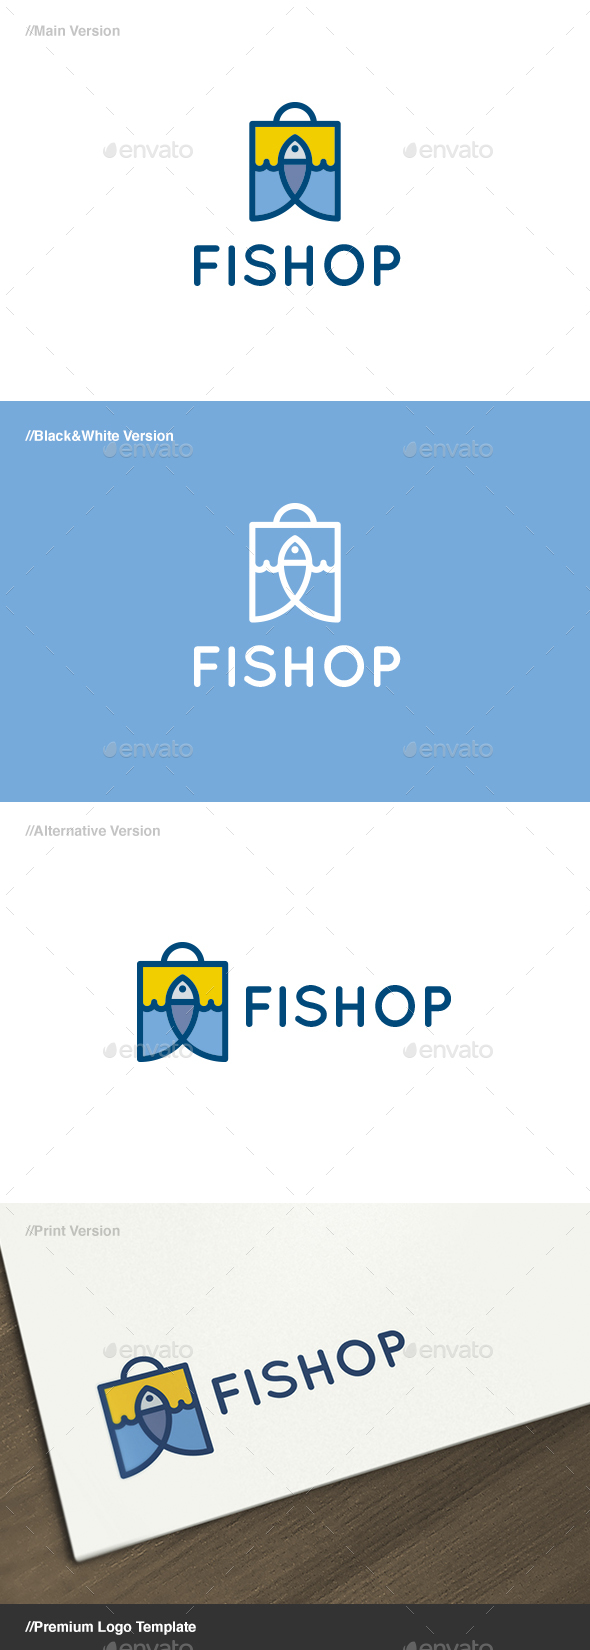 Fishop - Fish & Bag Logo